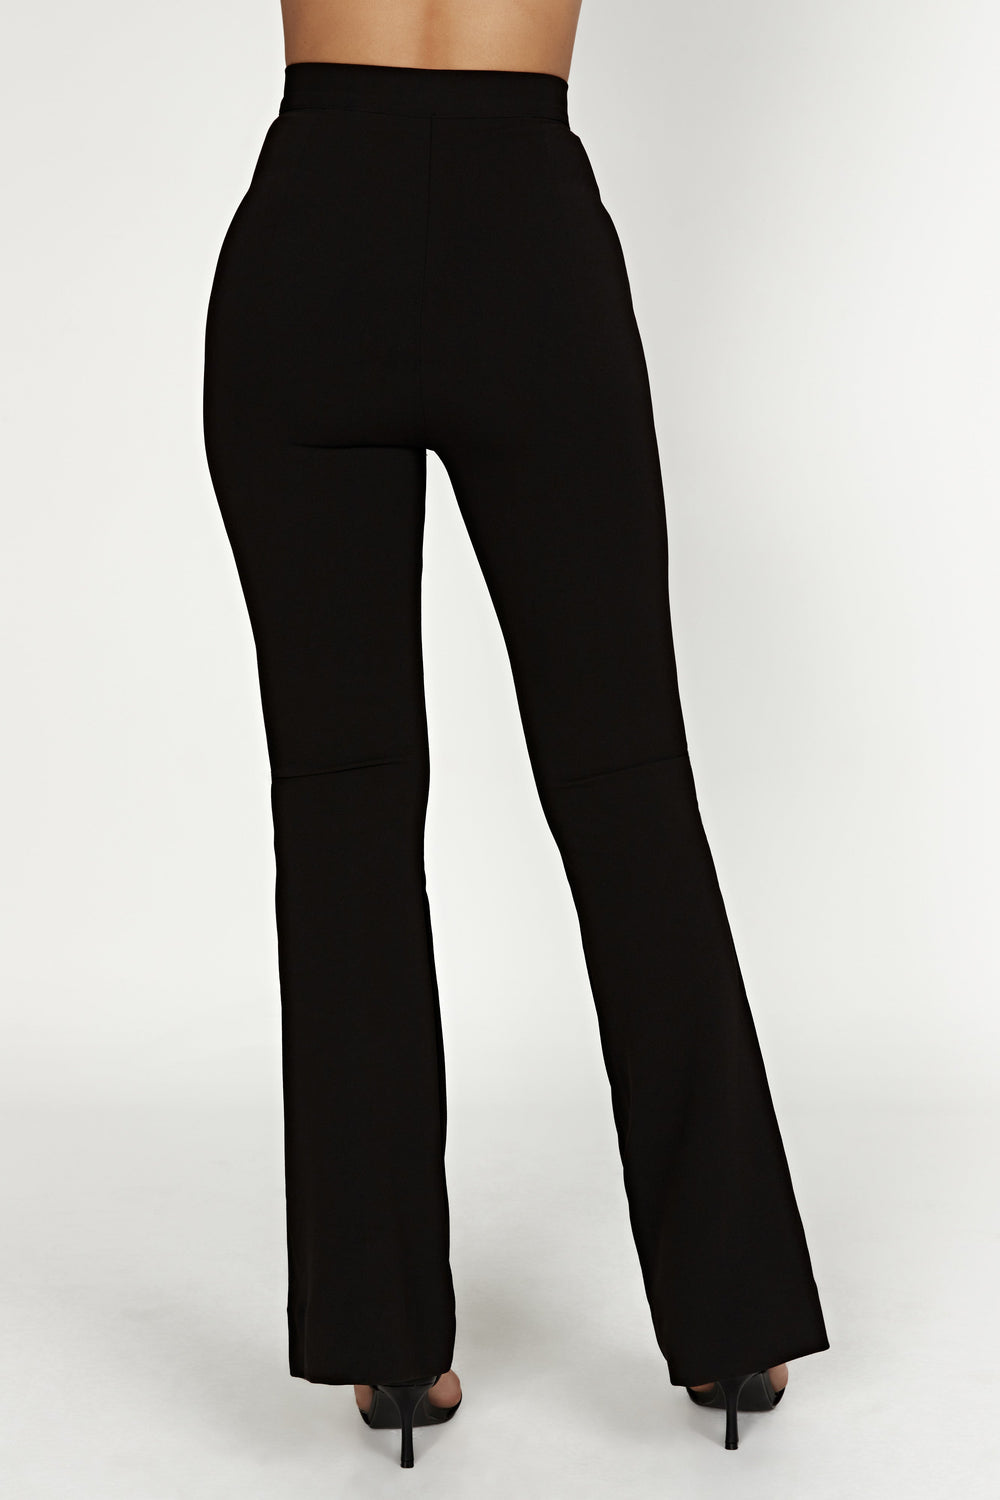 Zendaya Highwaisted Flare Pants - Black